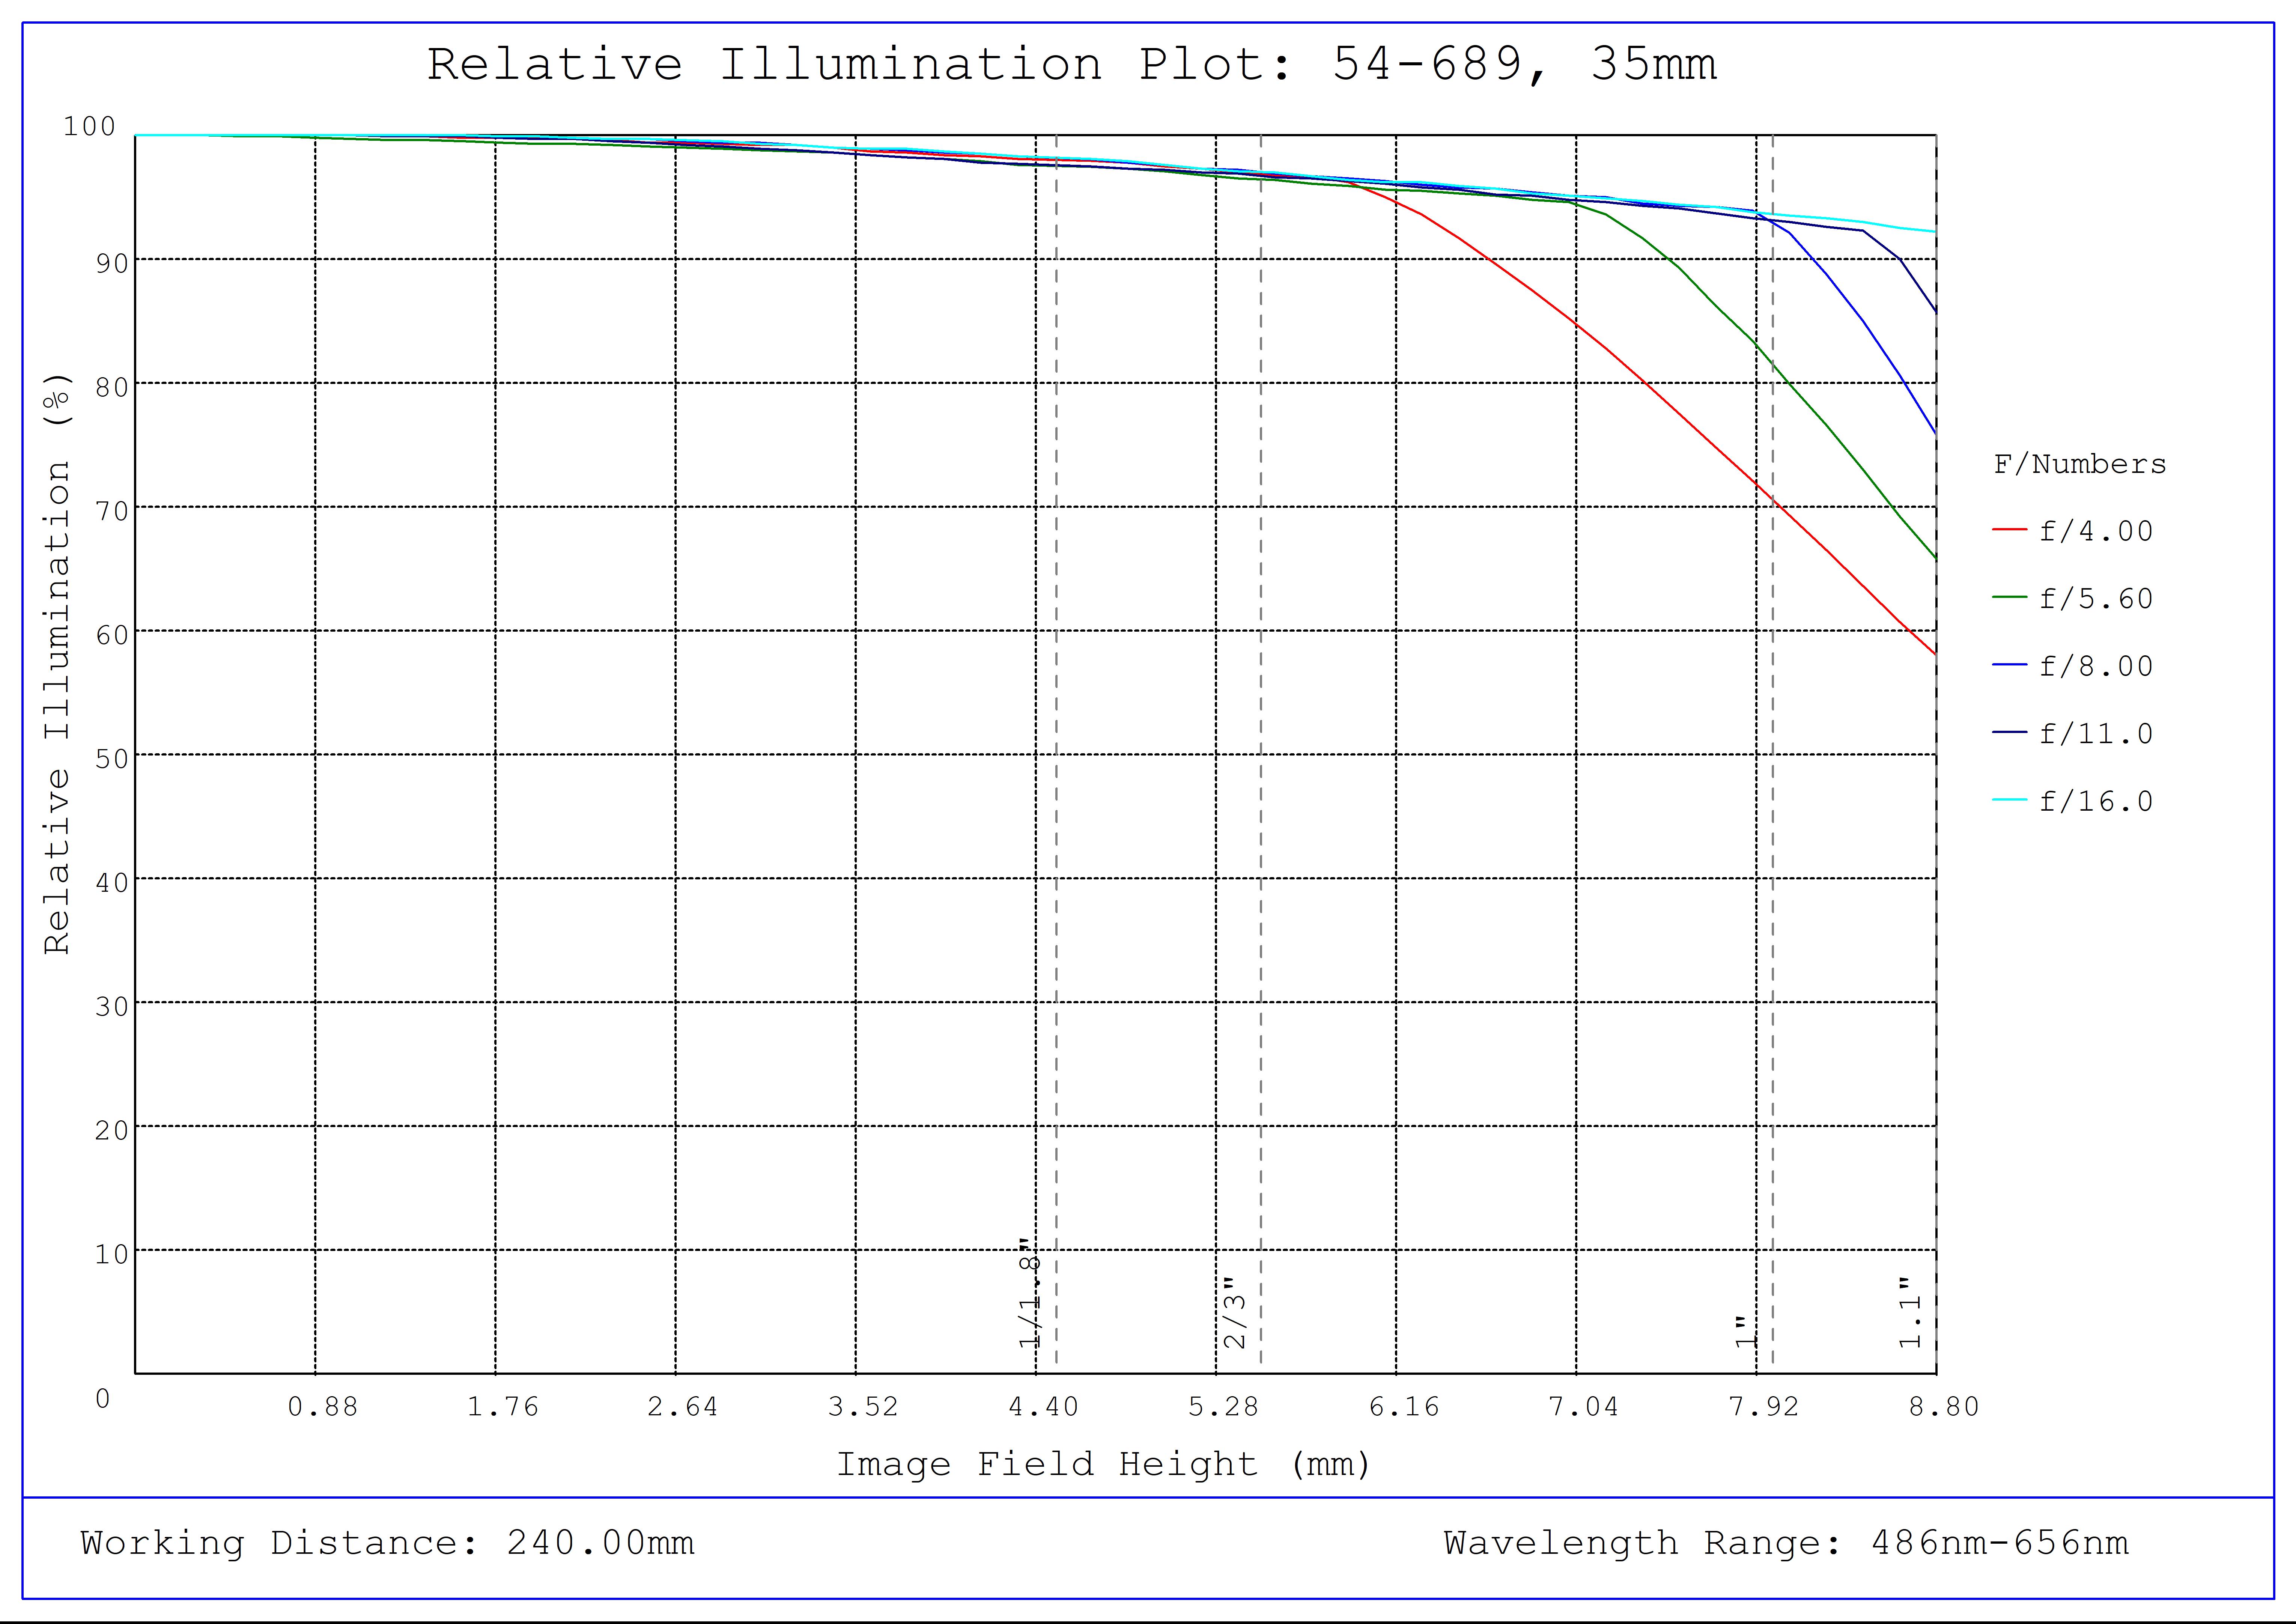 #54-689, 35mm DG Series Fixed Focal Length Lens, Relative Illumination Plot